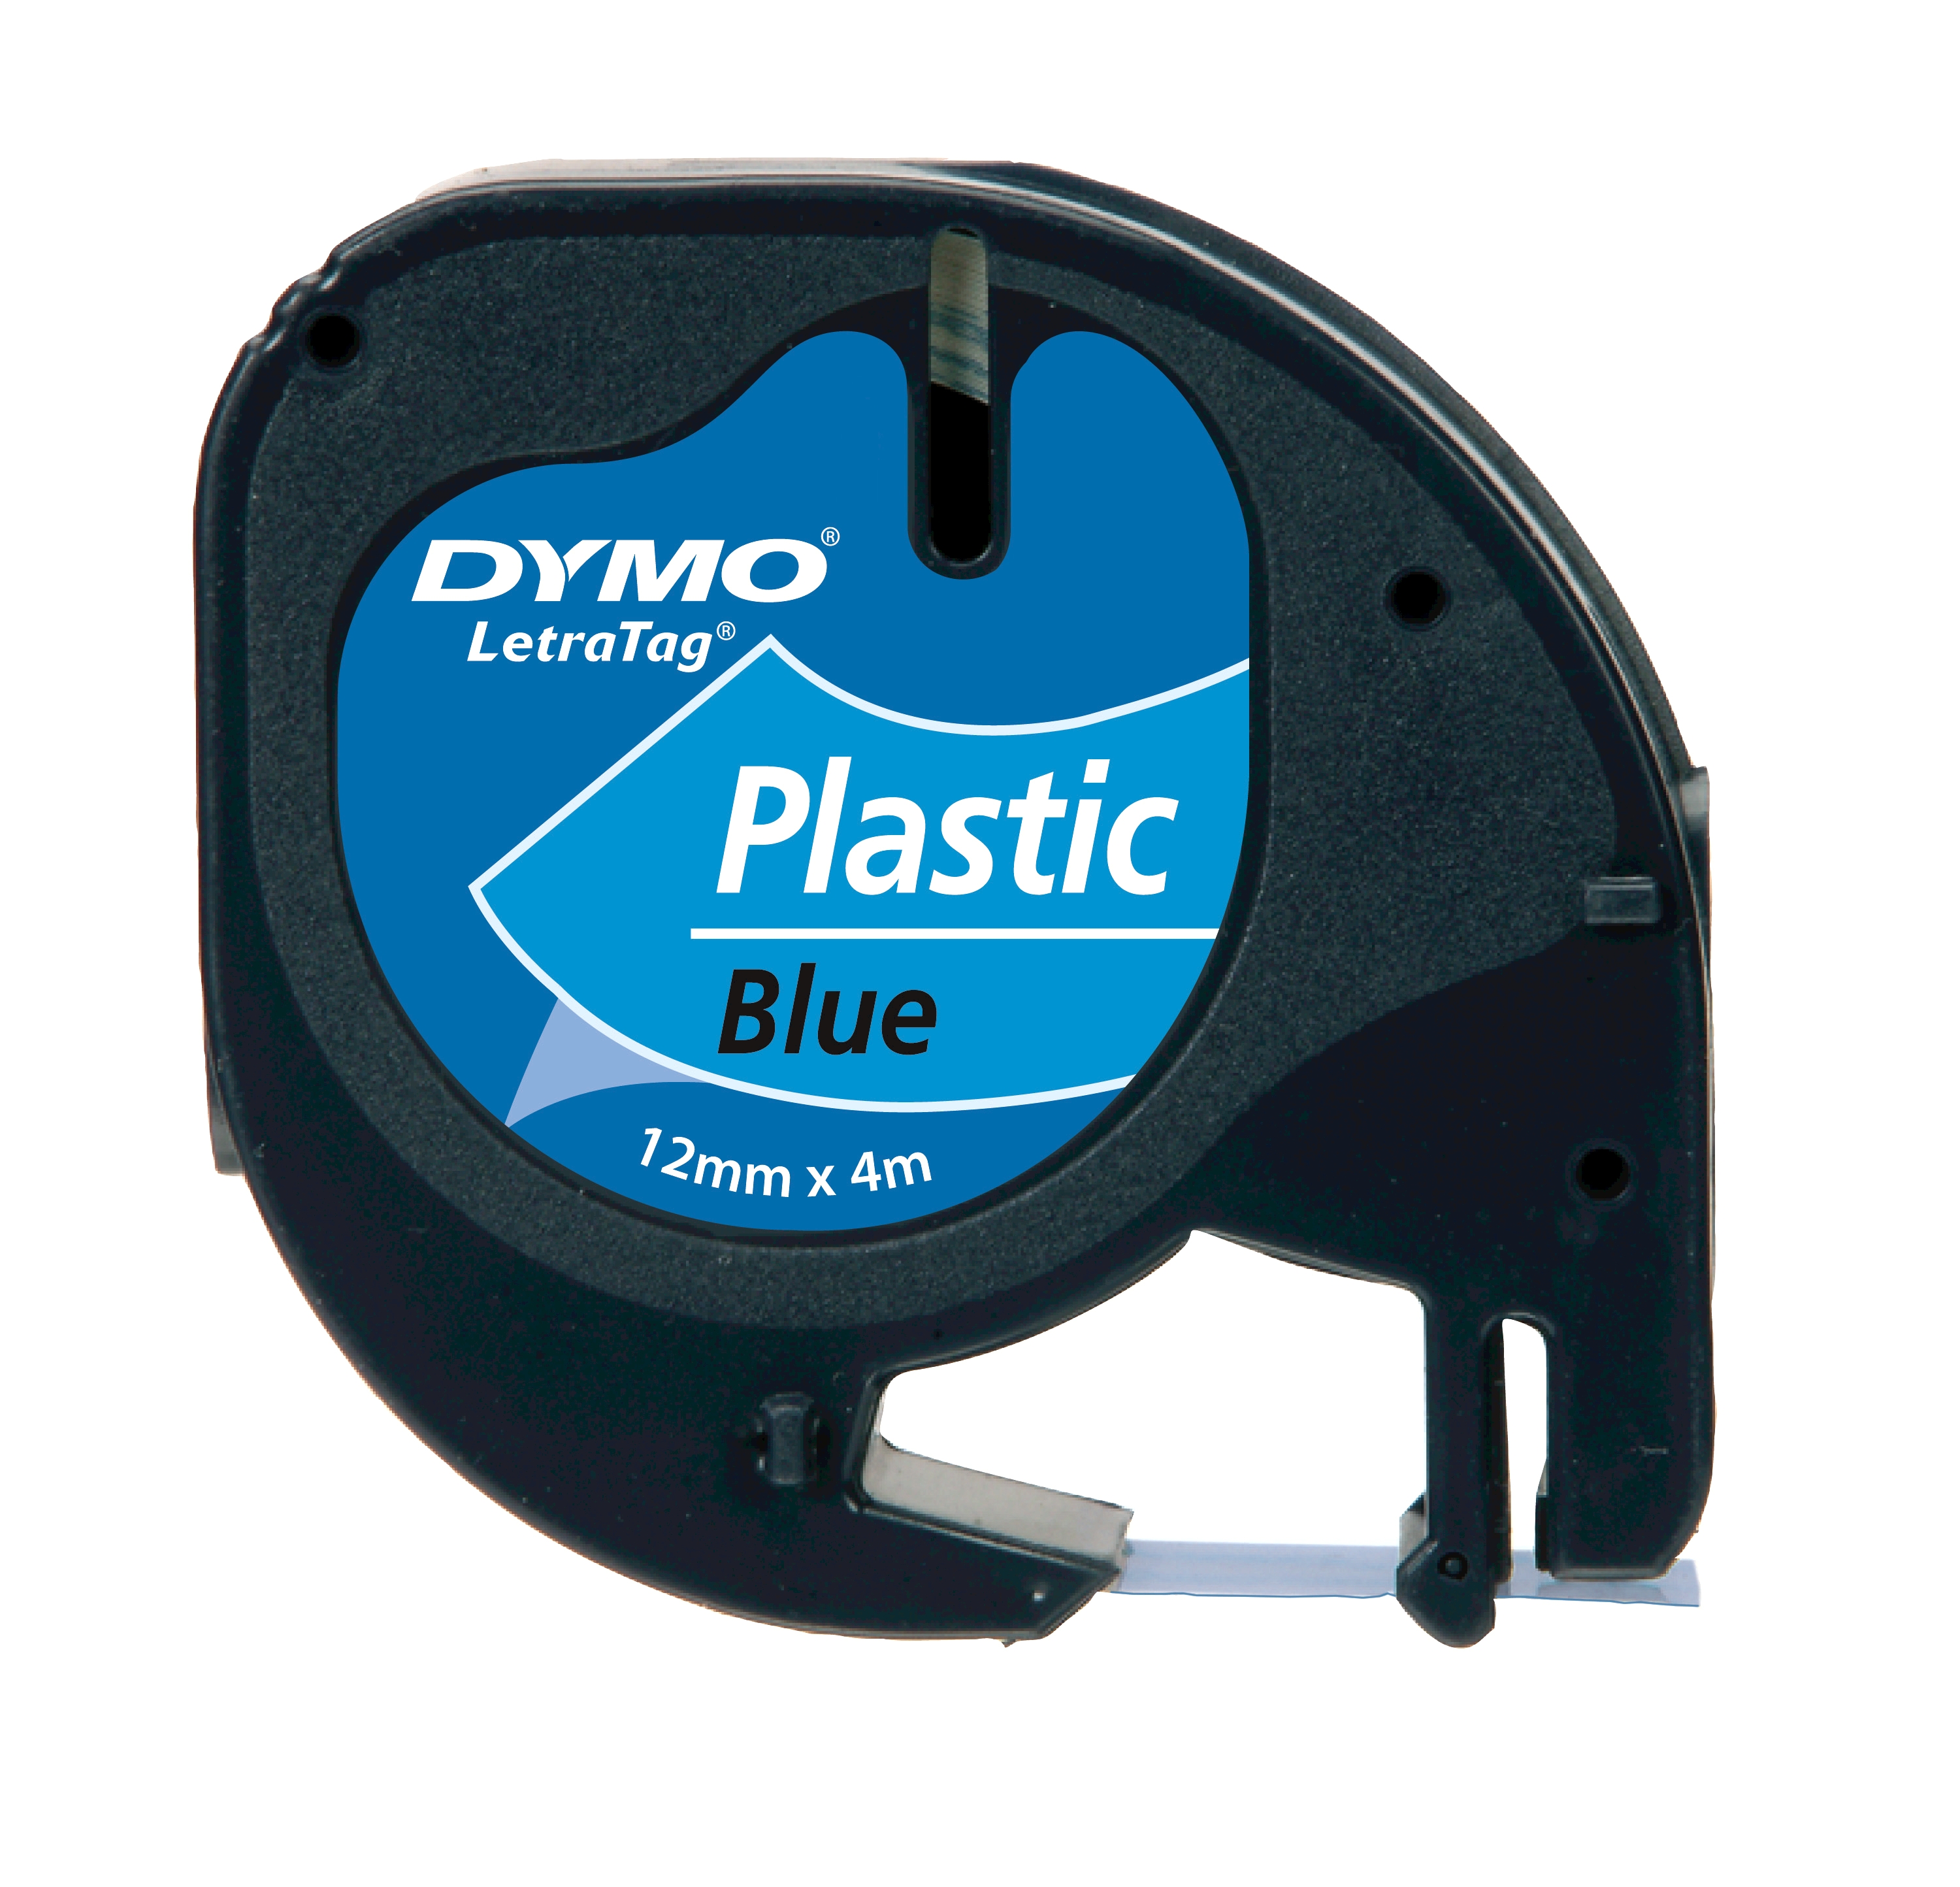 Dymo originální páska do tiskárny štítků, Dymo, S0721650, černý tisk/modrý podklad, 4m, 12mm, LetraTag plastová páska